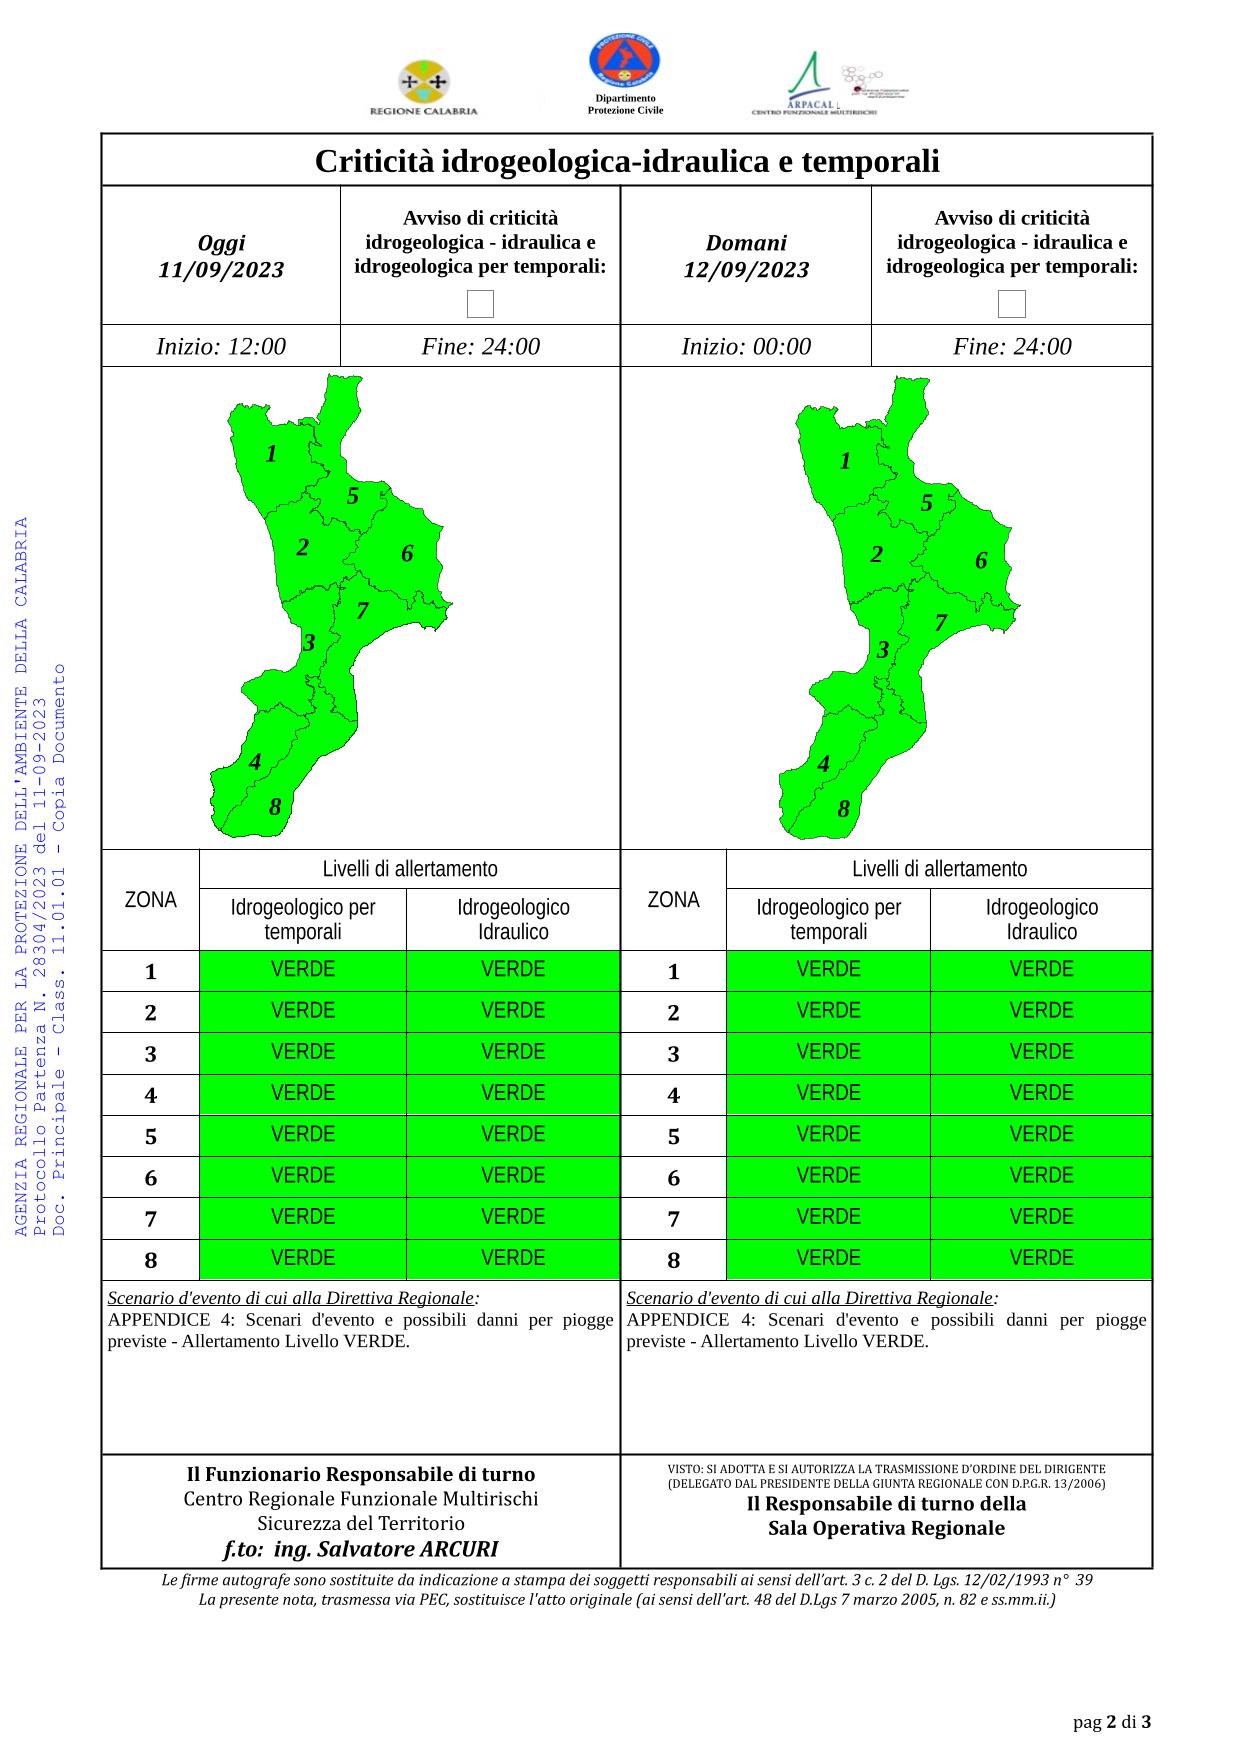 Criticità idrogeologica-idraulica e temporali in Calabria 11-09-2023